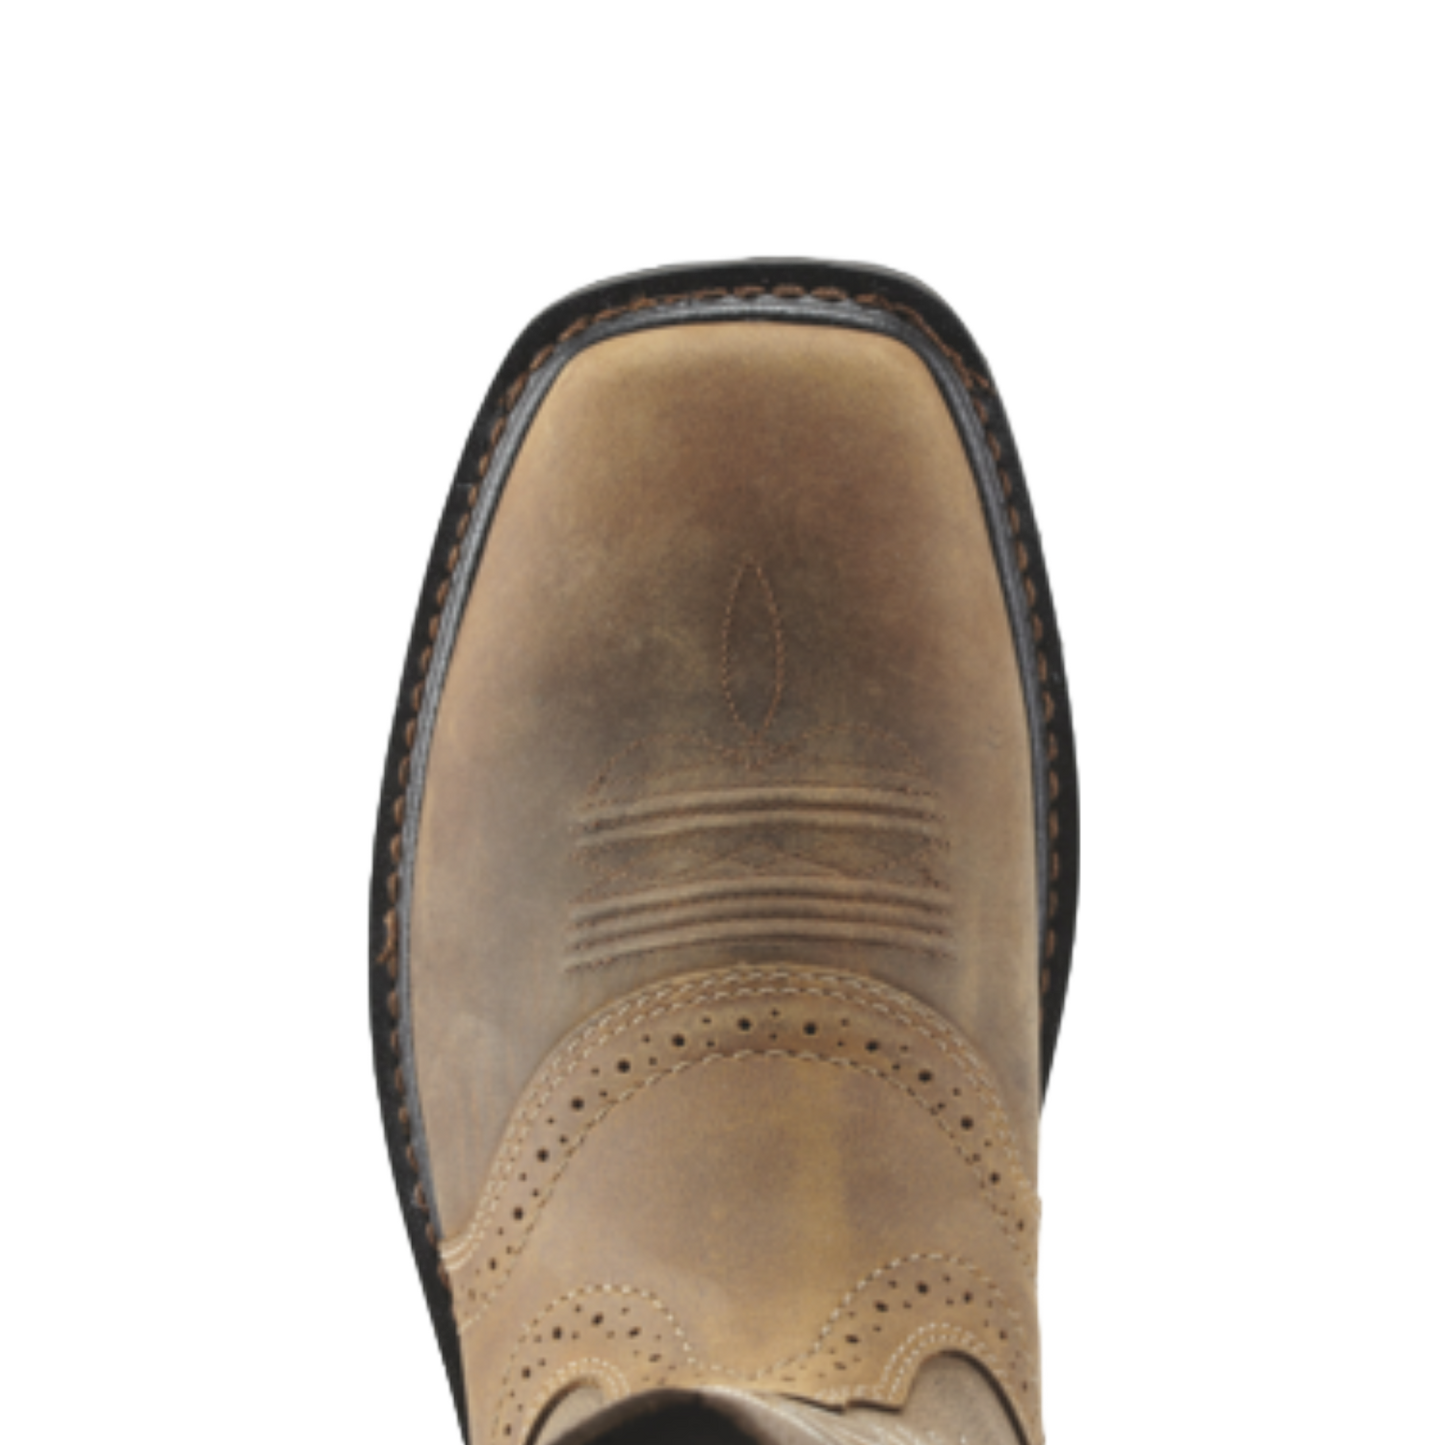 Ariat Men's Sierra Aged Bark Wide Square Steel Toe Work Boots 10010134